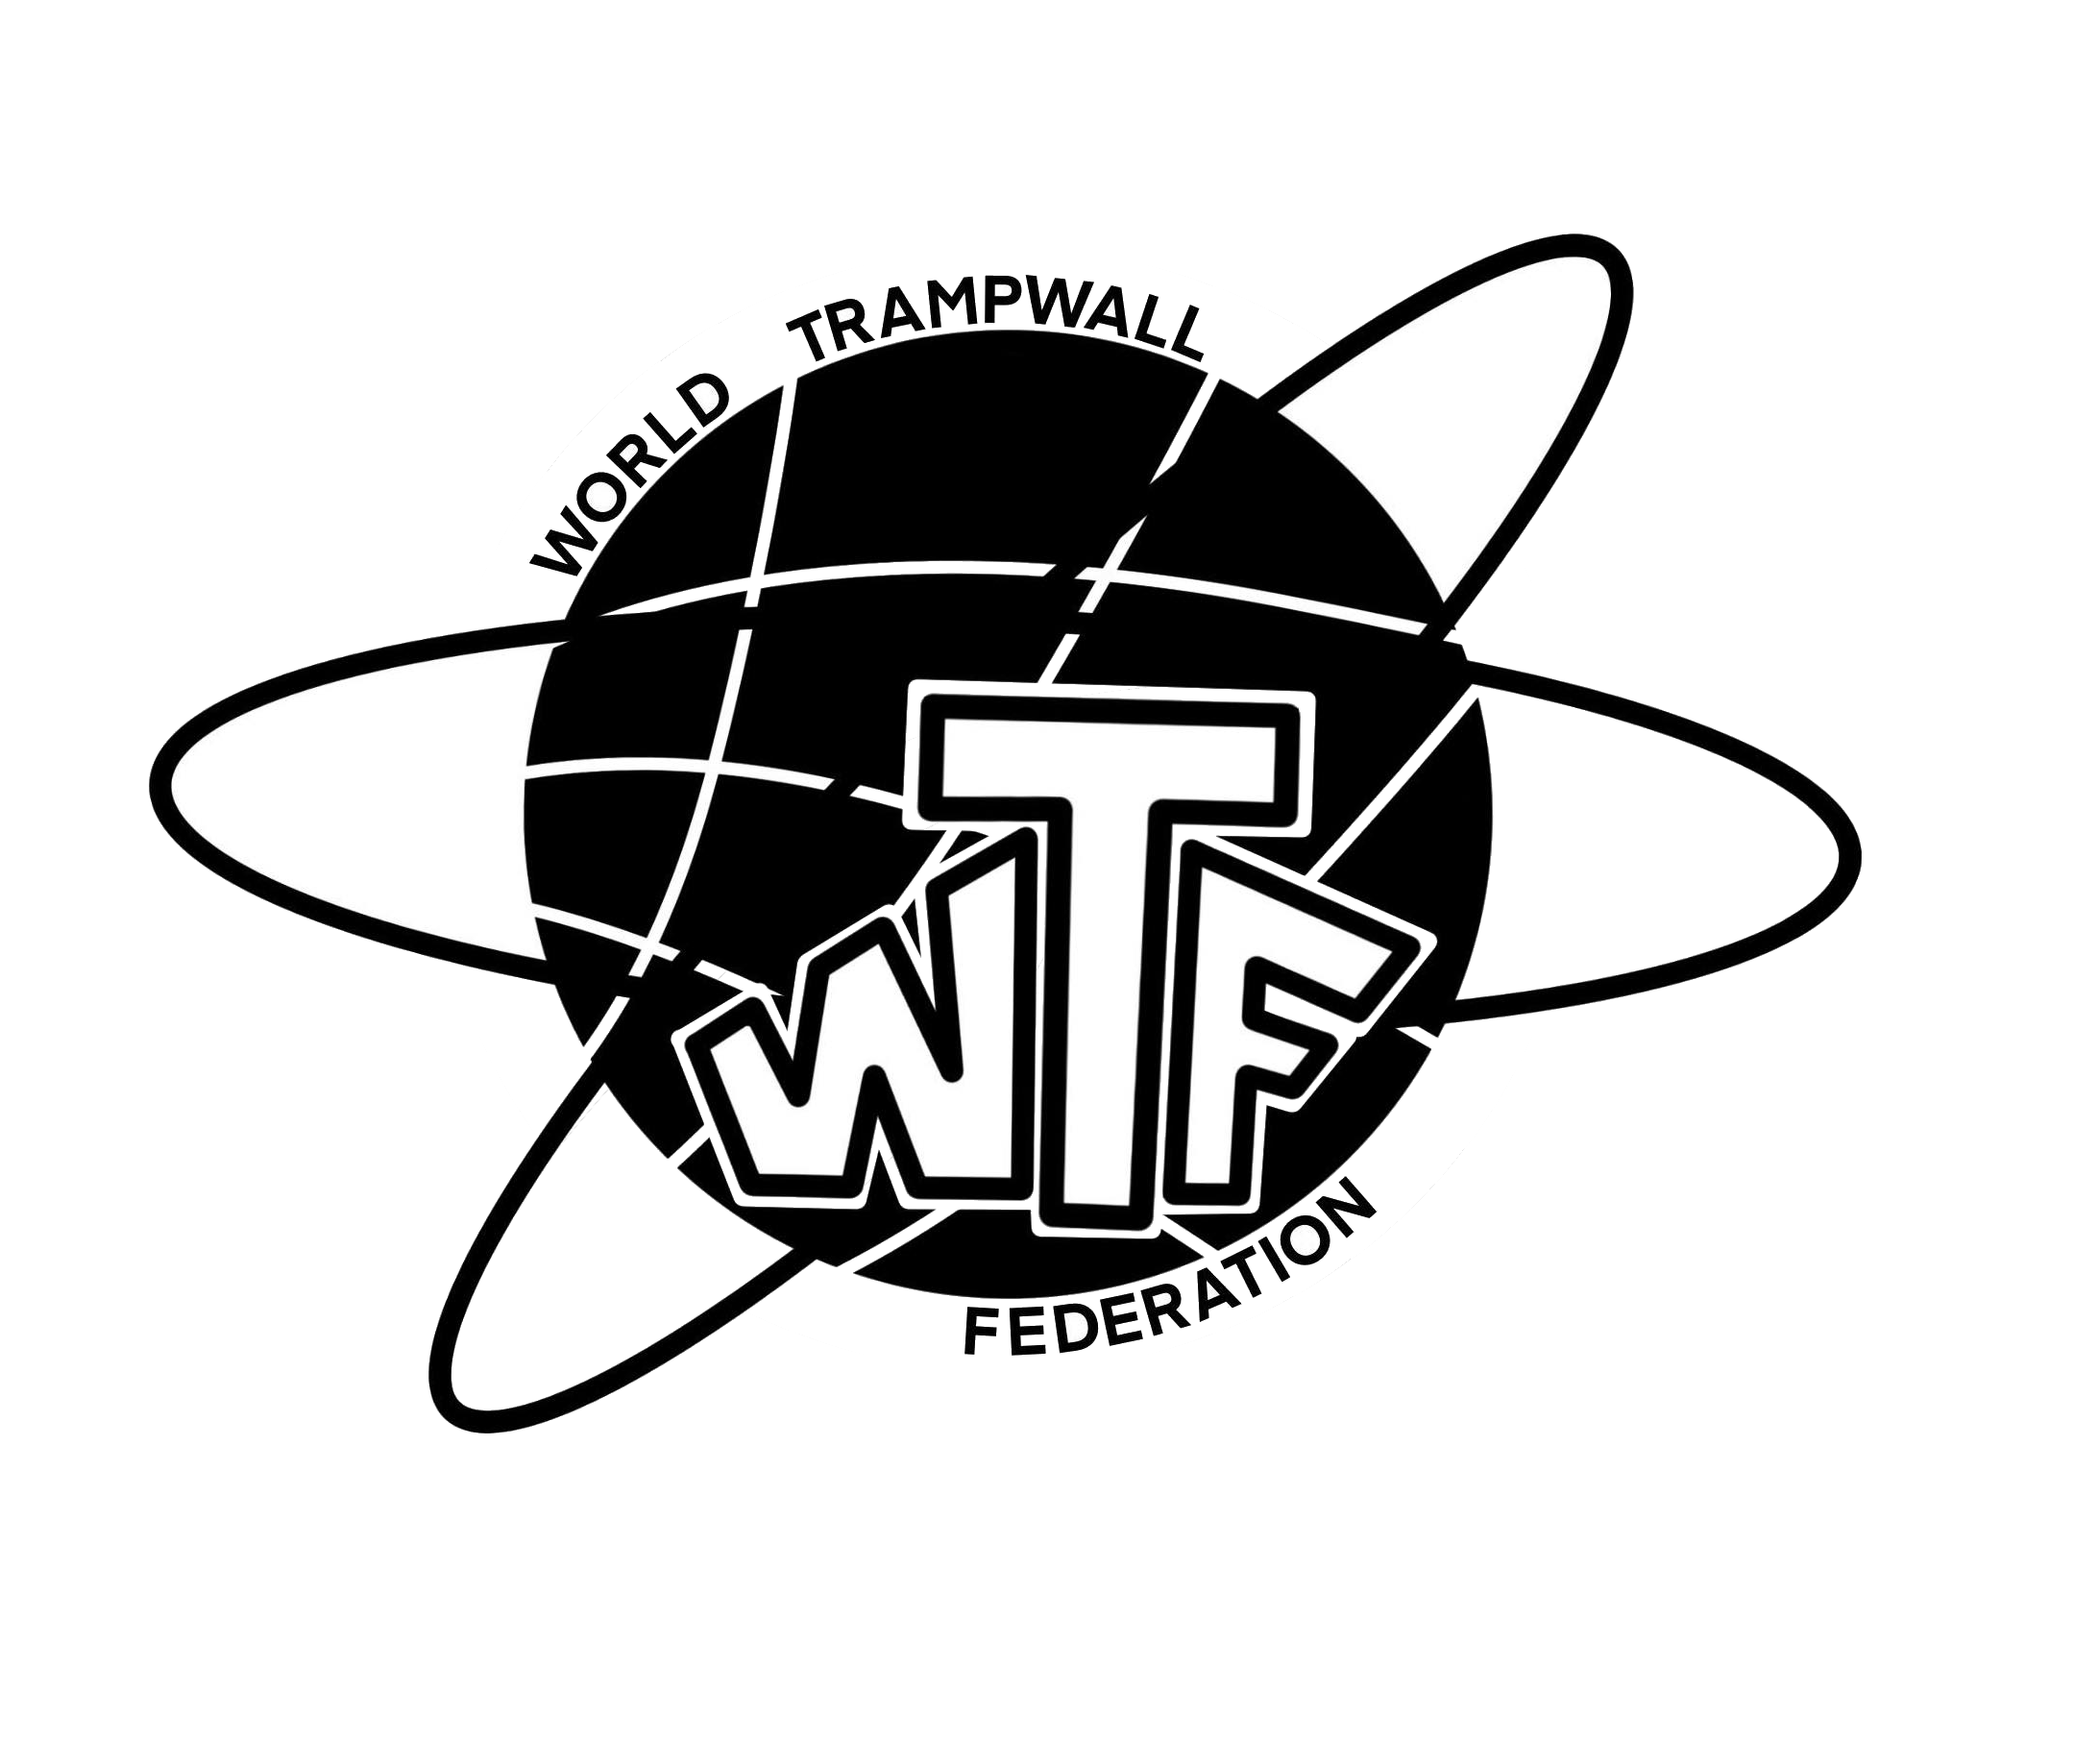 World Trampwall Federation logo